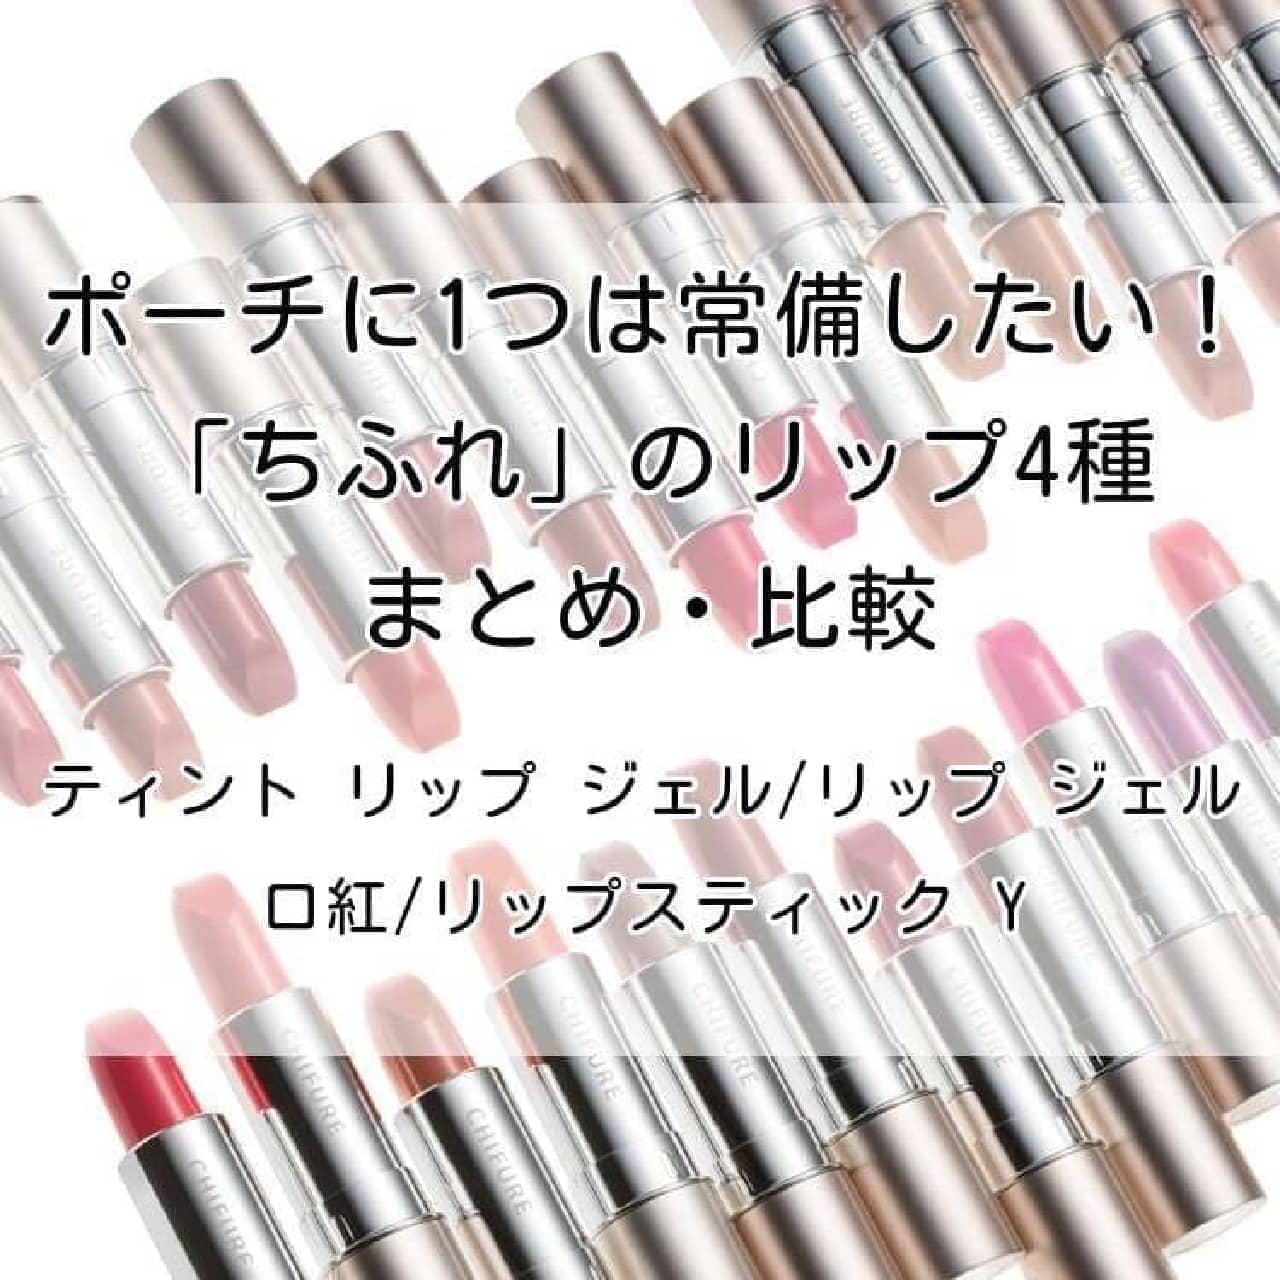 Comparison of 4 types of Chifure lipsticks